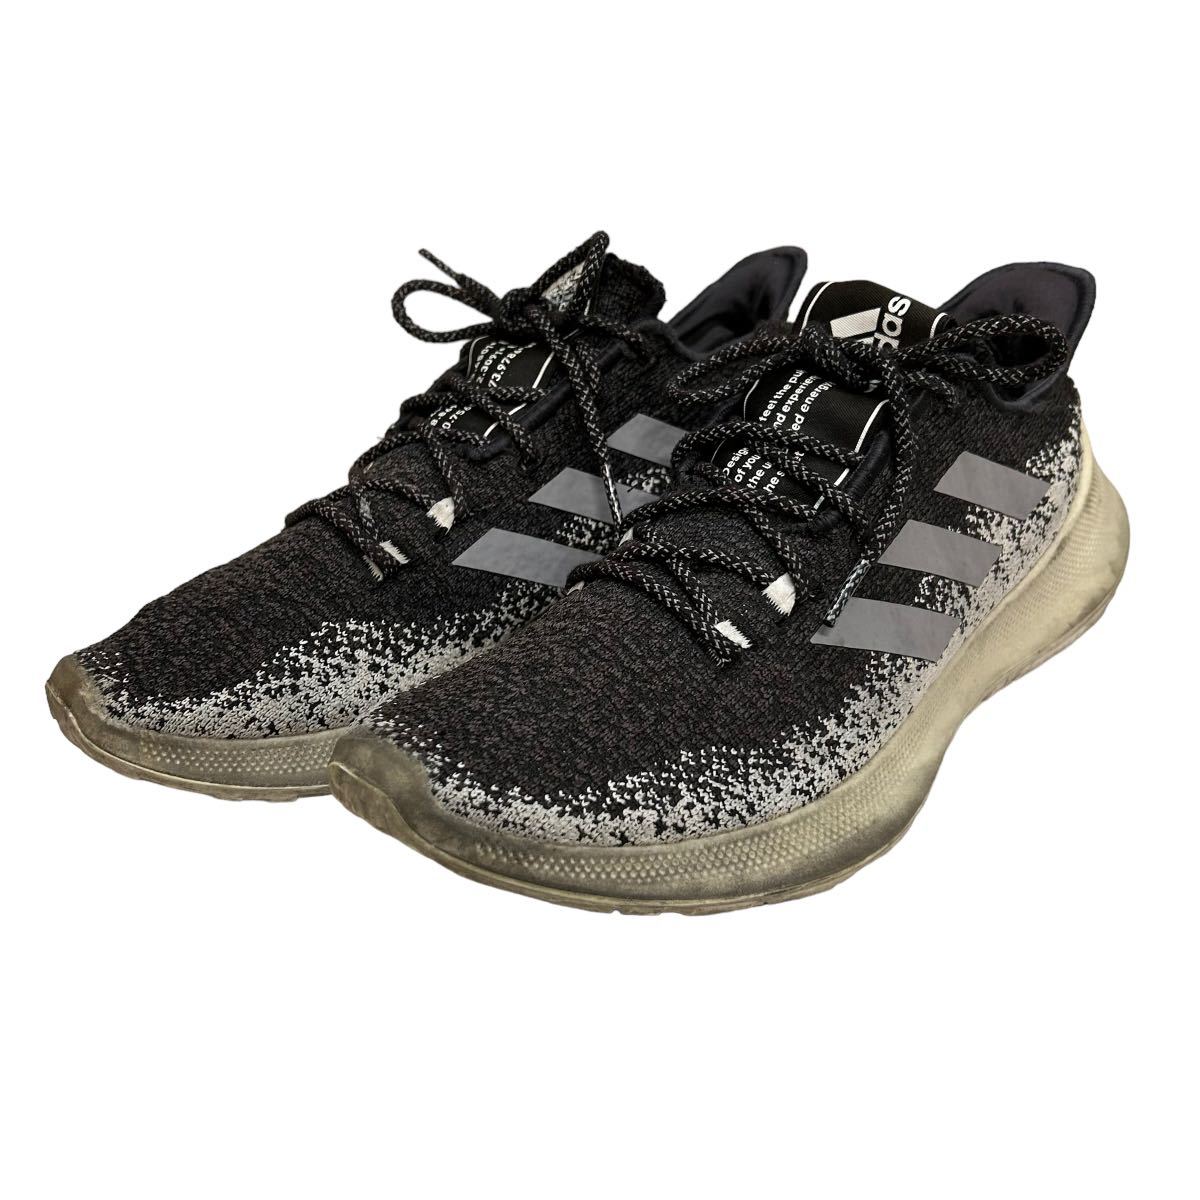 BC818 adidas Adidas SenseBounce+ men's sneakers US8.5 26.5cm black white mesh 